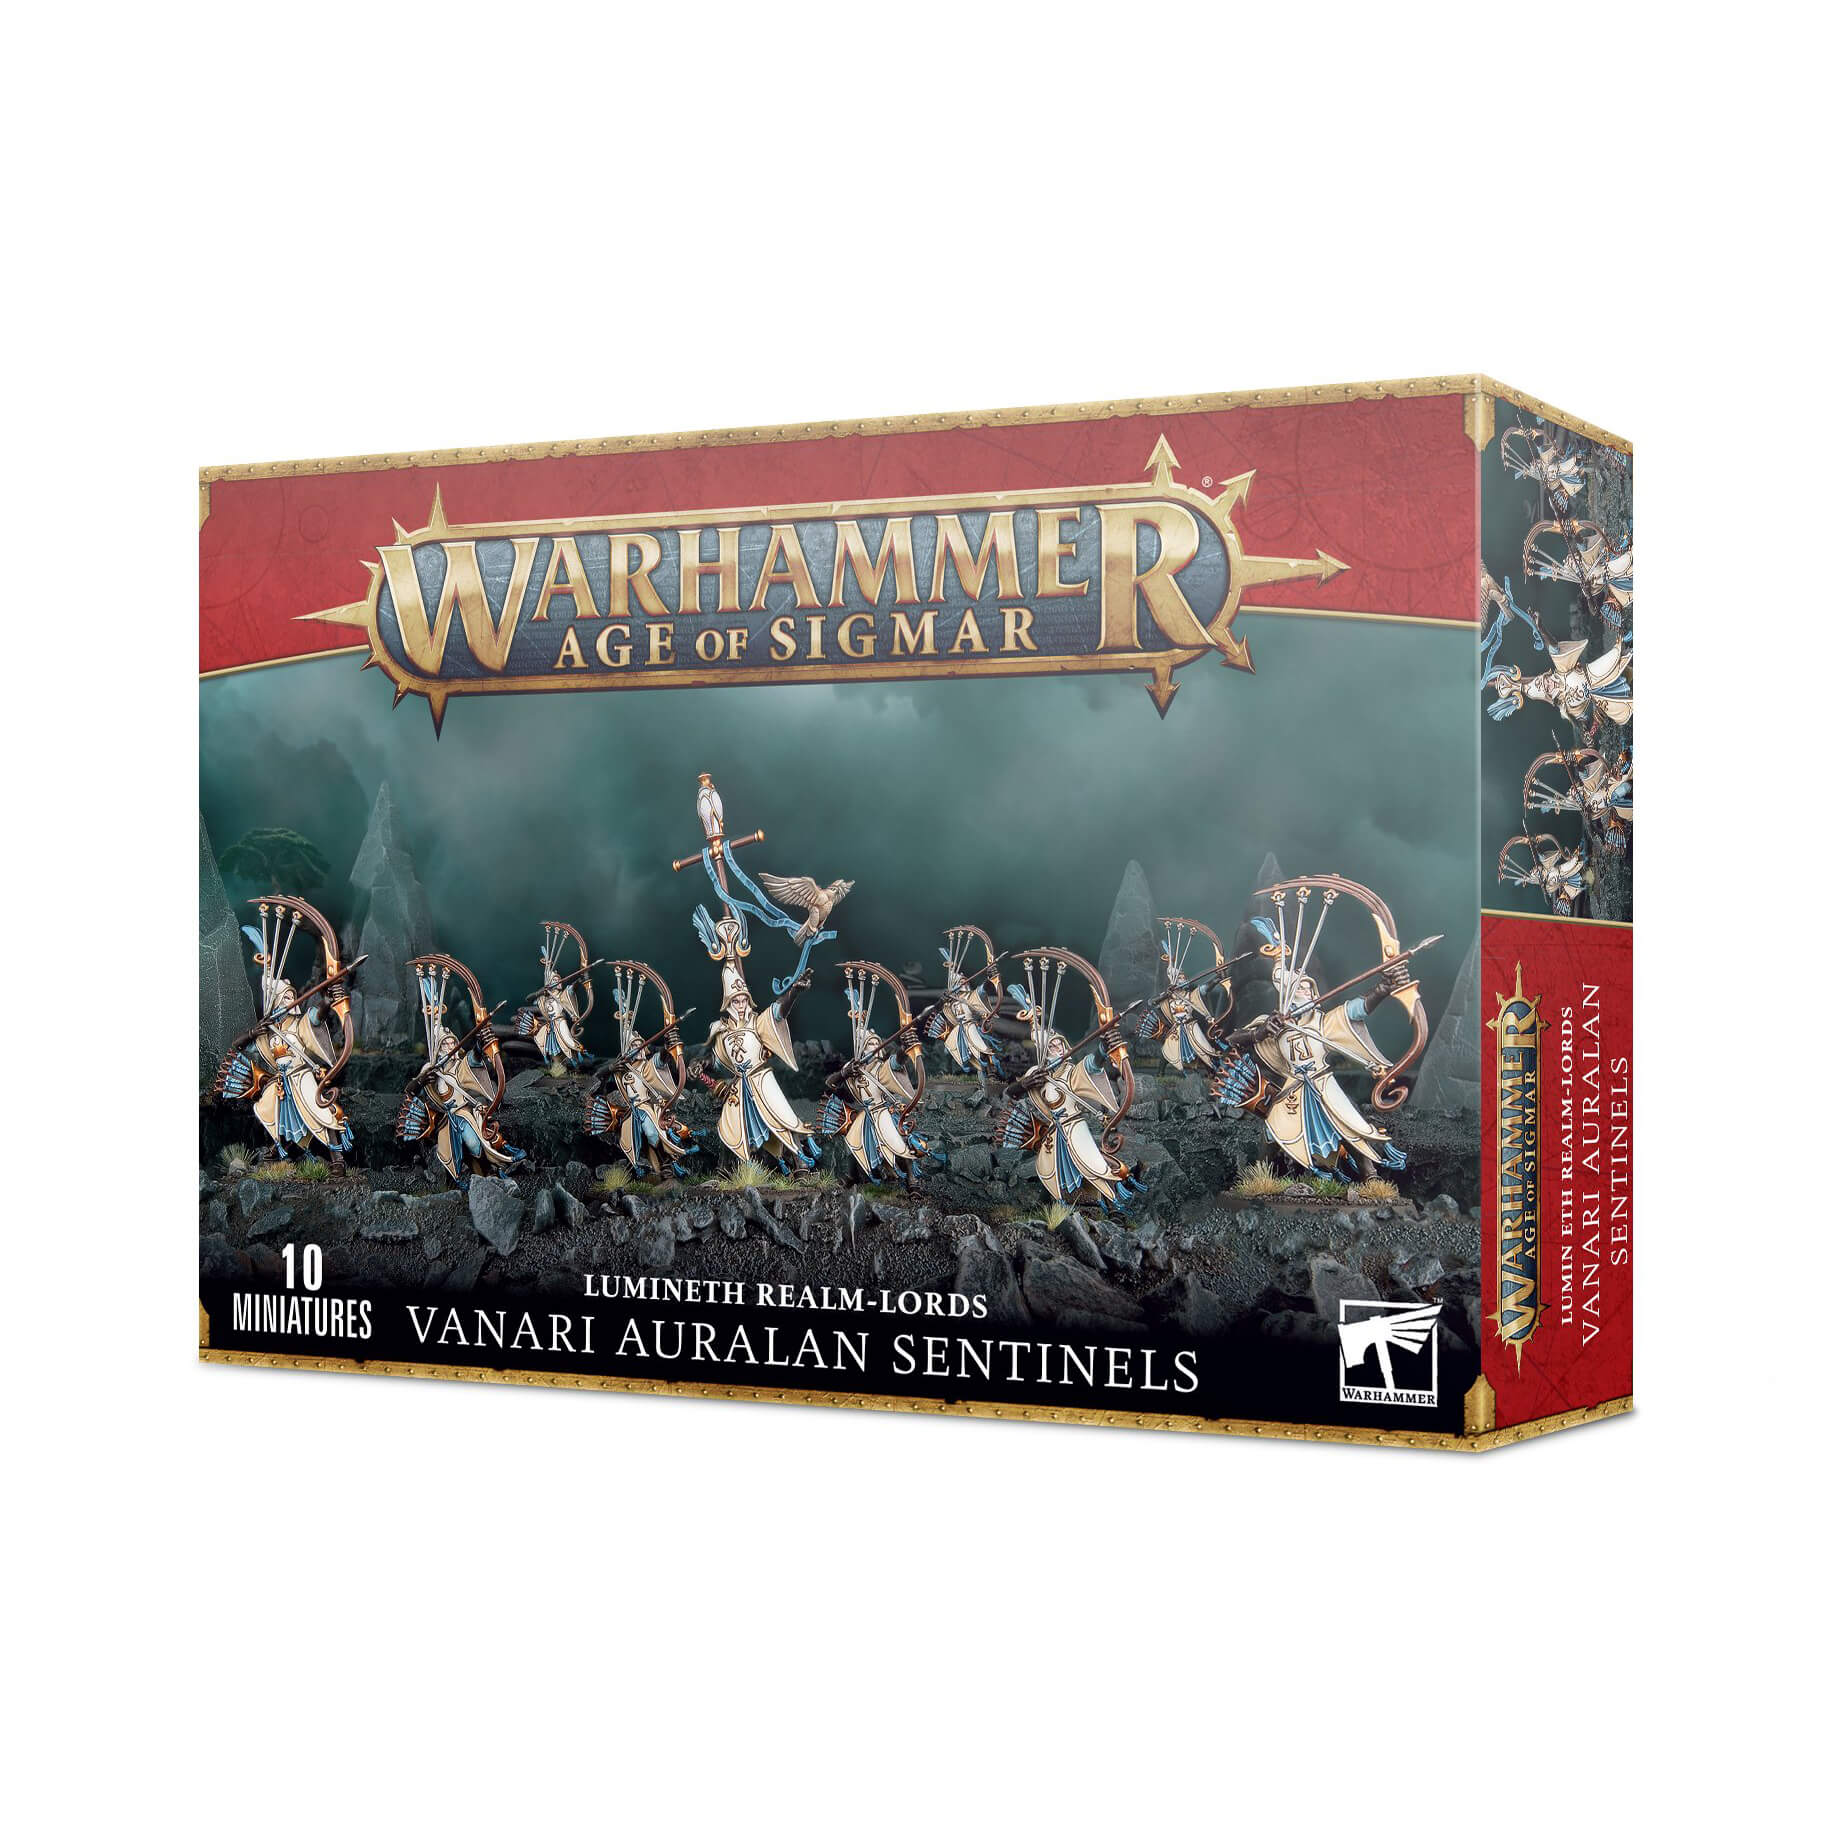 Warhammer Age of Sigmar Lumineth Realm-Lords Vanari Auralan Sentinels